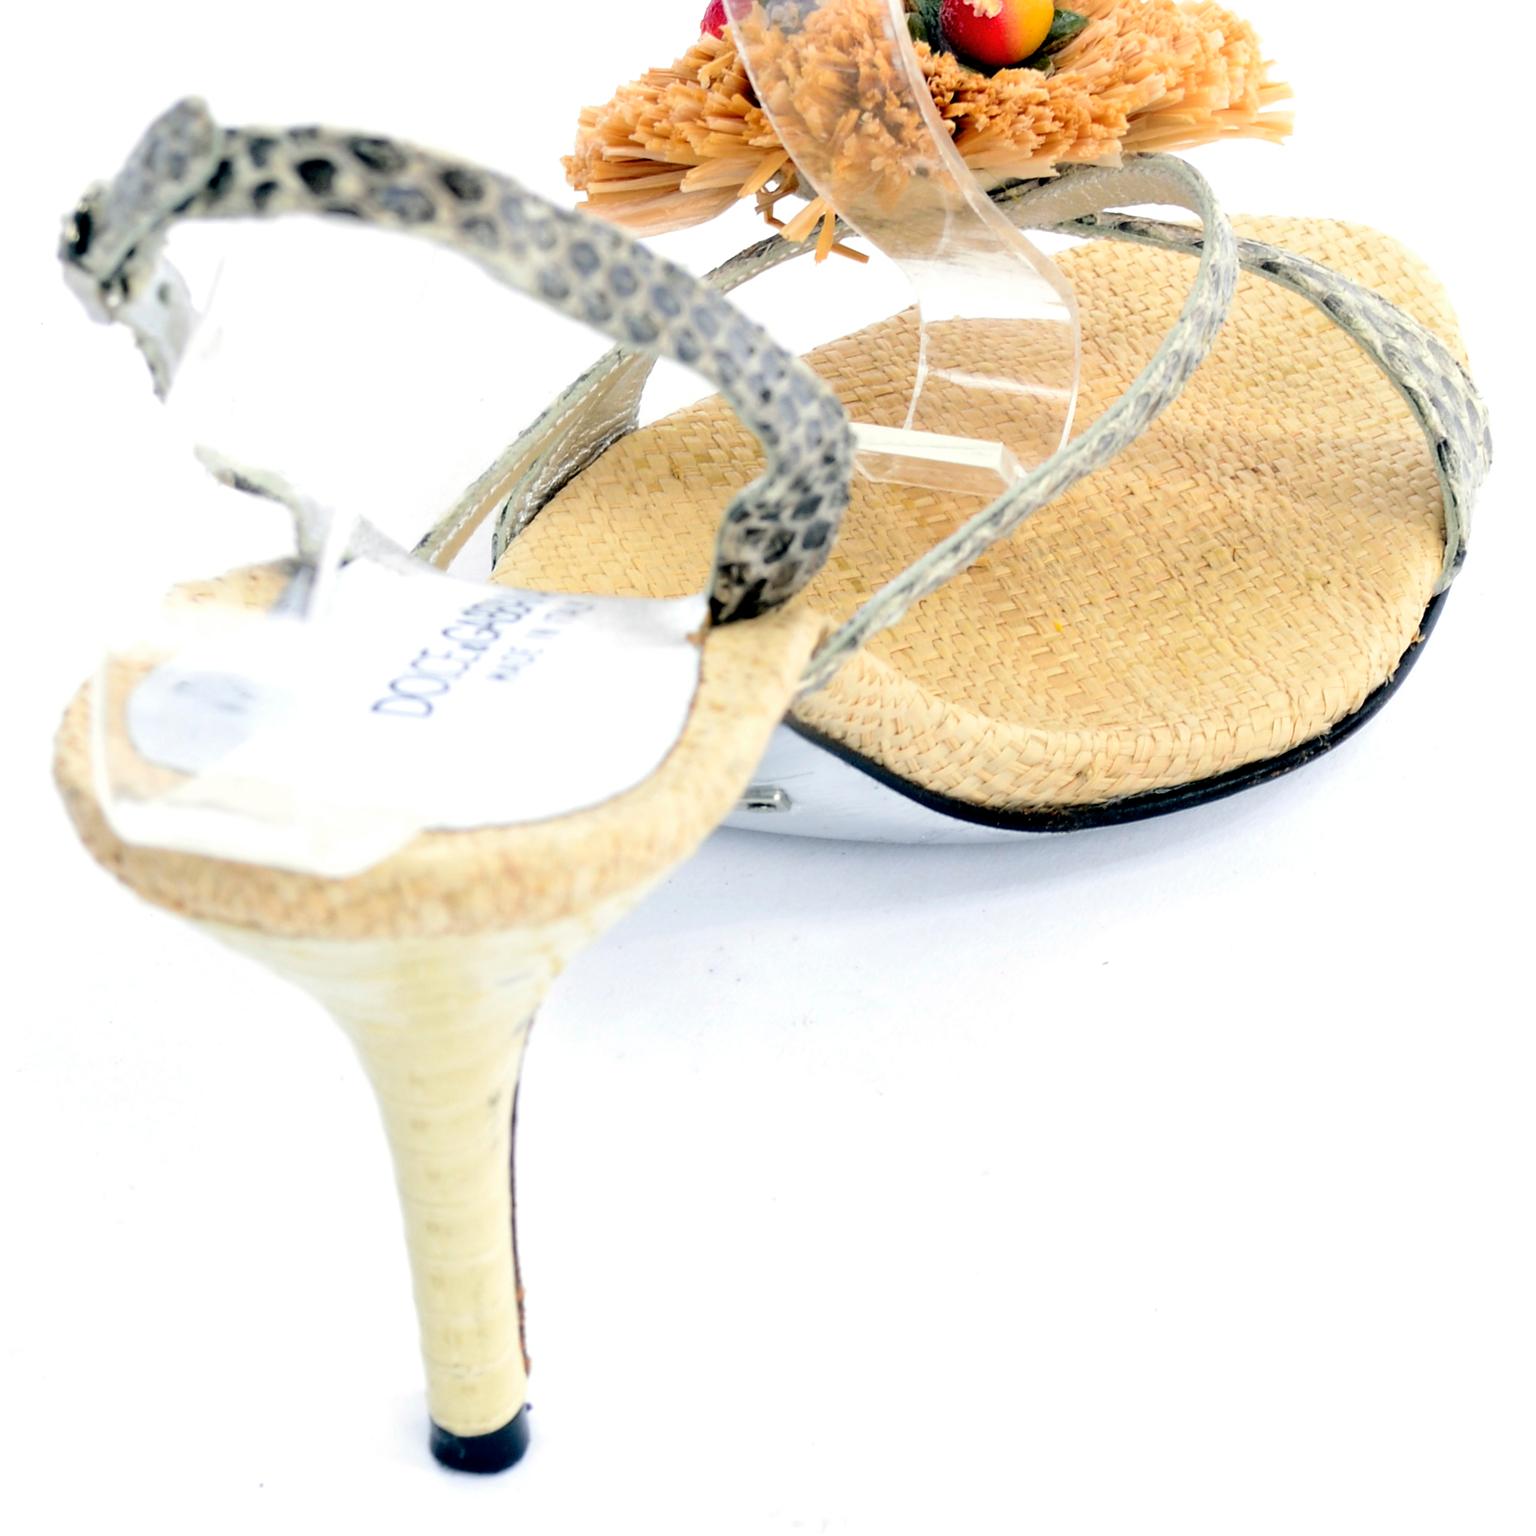 Dolce & Gabbana Shoes Raffia & Fruit Snakeskin Slingback Sandals Heels 37.5 In Good Condition For Sale In Portland, OR